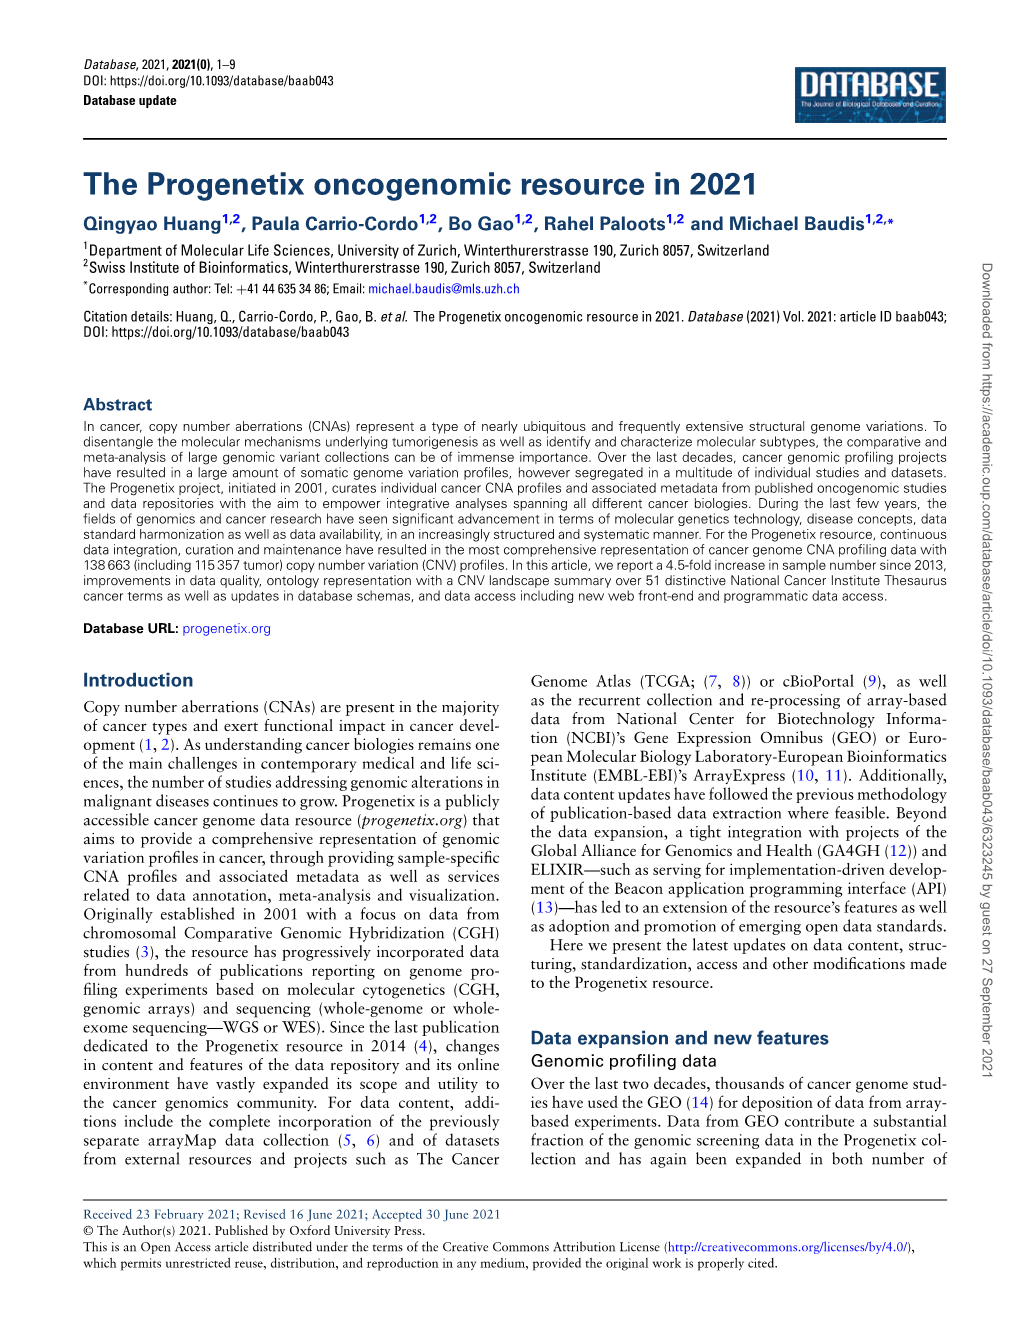 The Progenetix Oncogenomic Resource in 2021